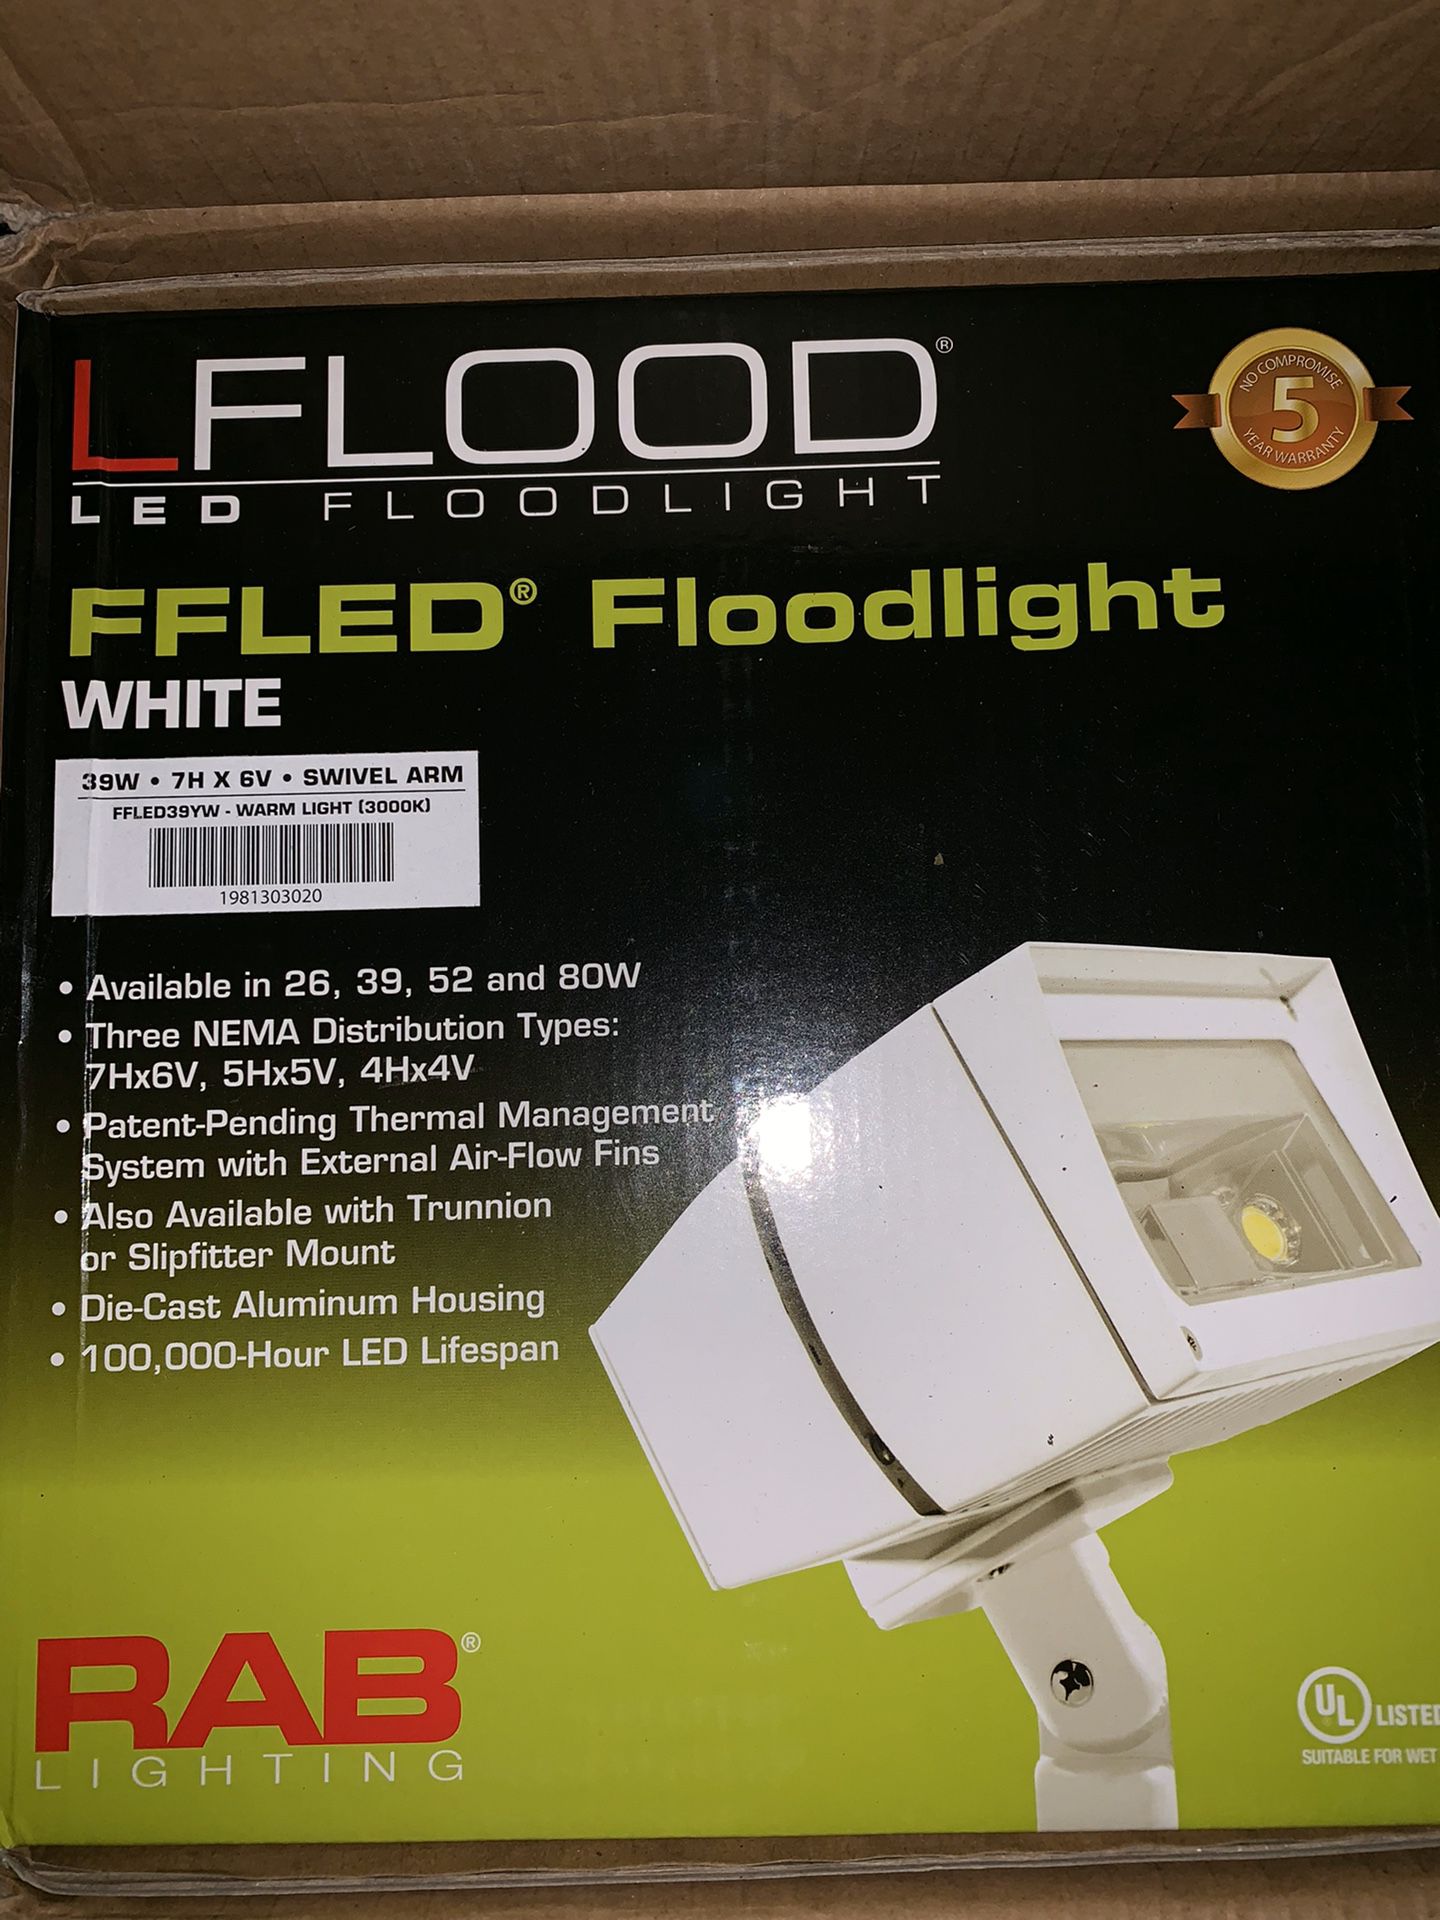 RAB LED Light Floodlight NEW Flood Light